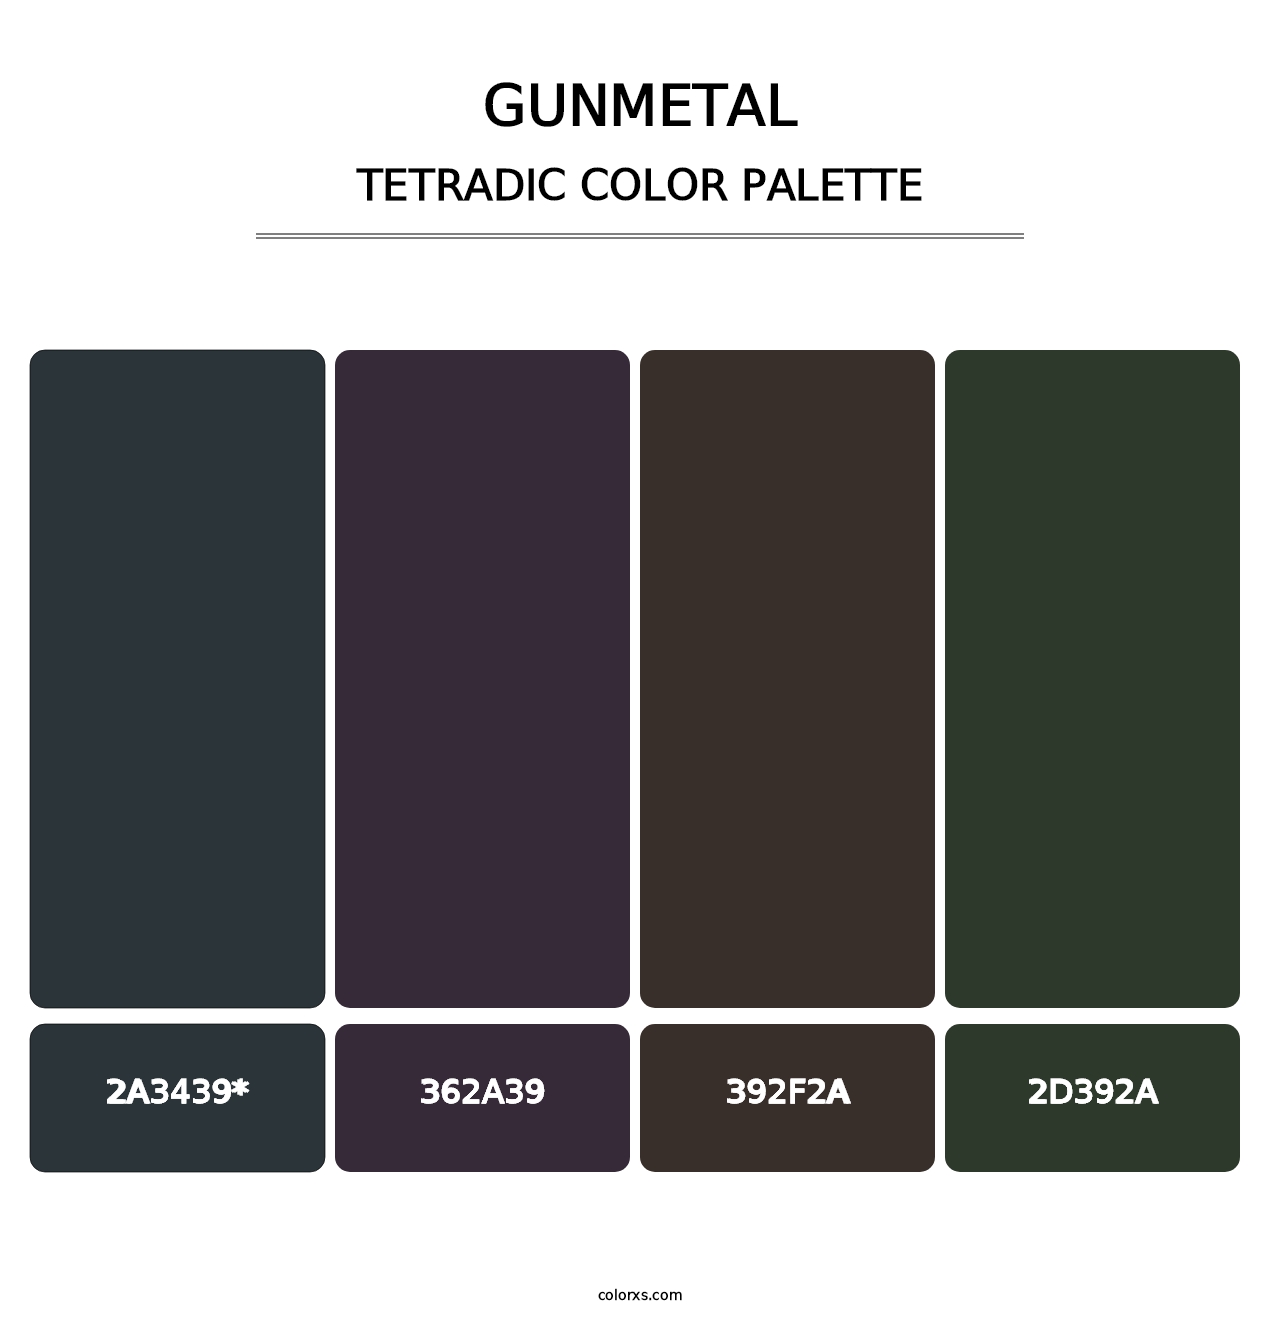 Gunmetal - Tetradic Color Palette